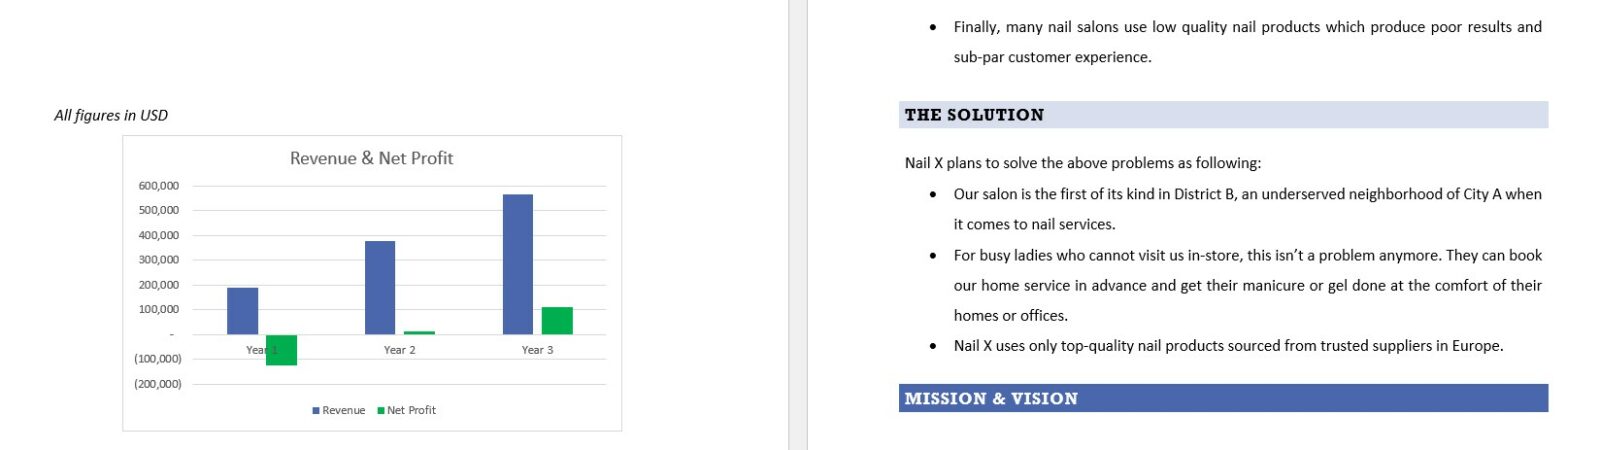 Nail salon business plan sample